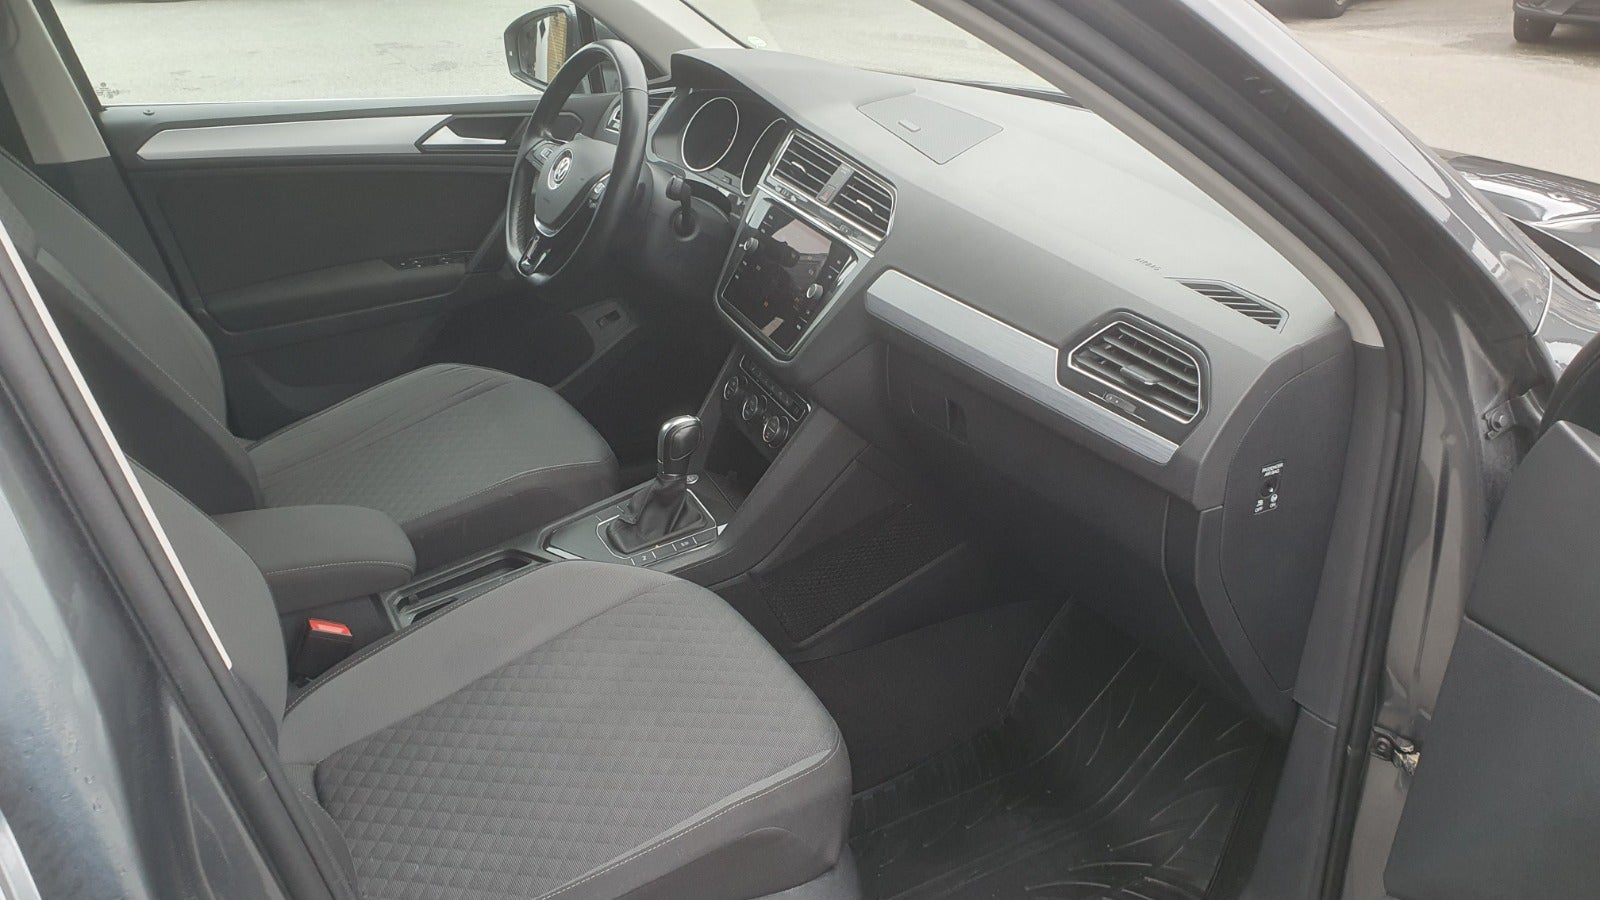 VW Tiguan TDi 150 Comfortline DSG